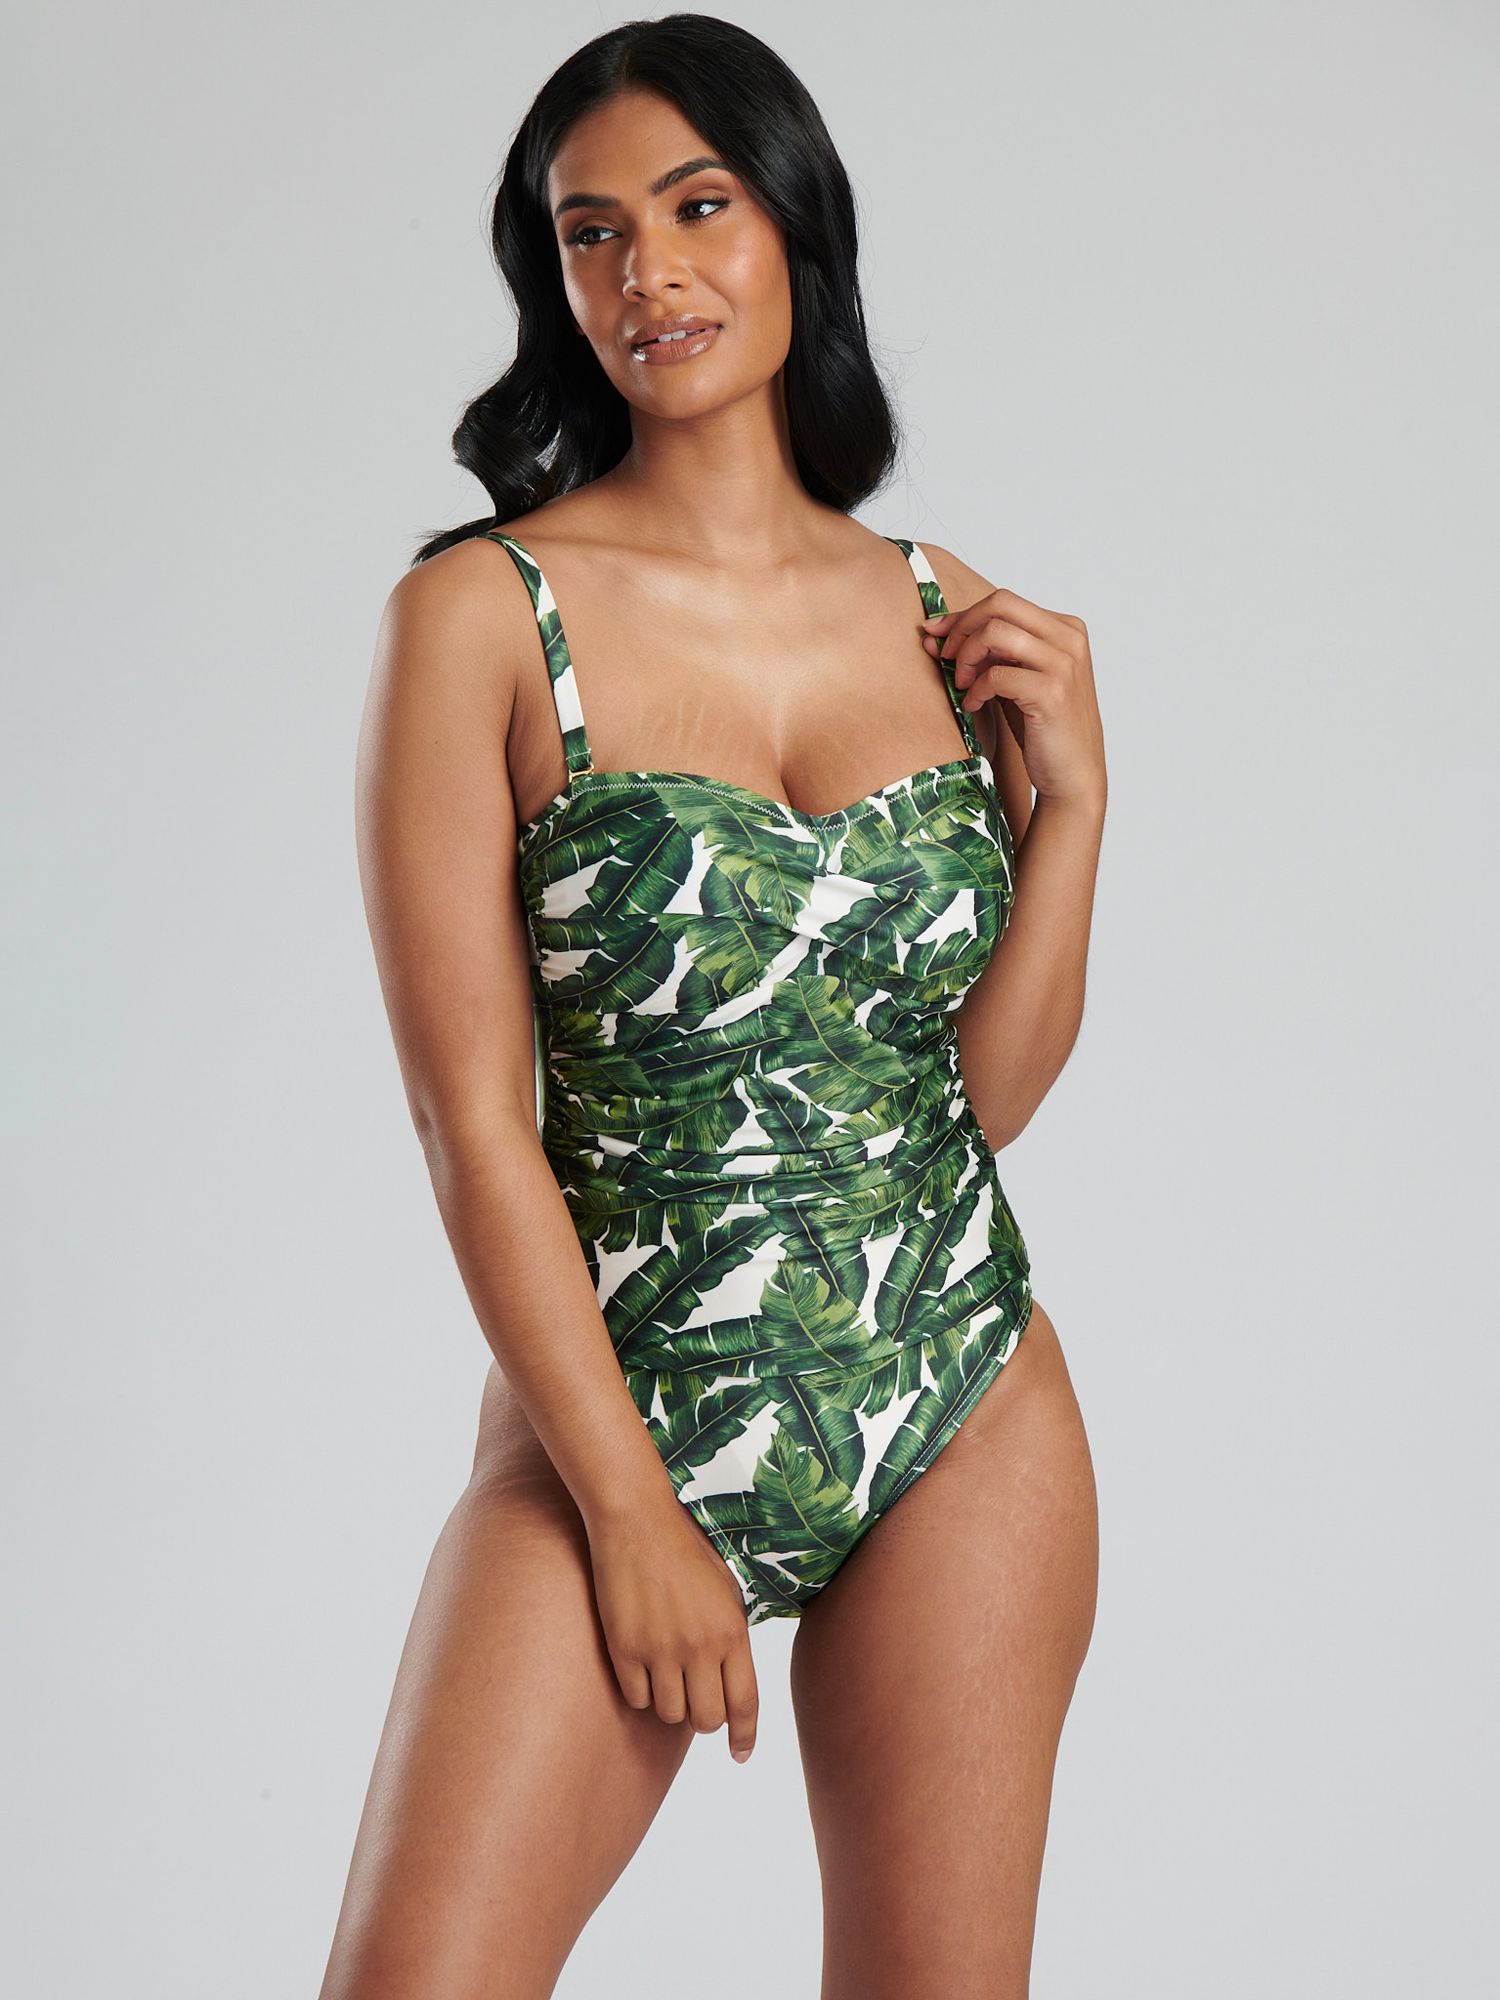 South Beach Leaf Print Twist Top Swimsuit, Green/Multi, 14